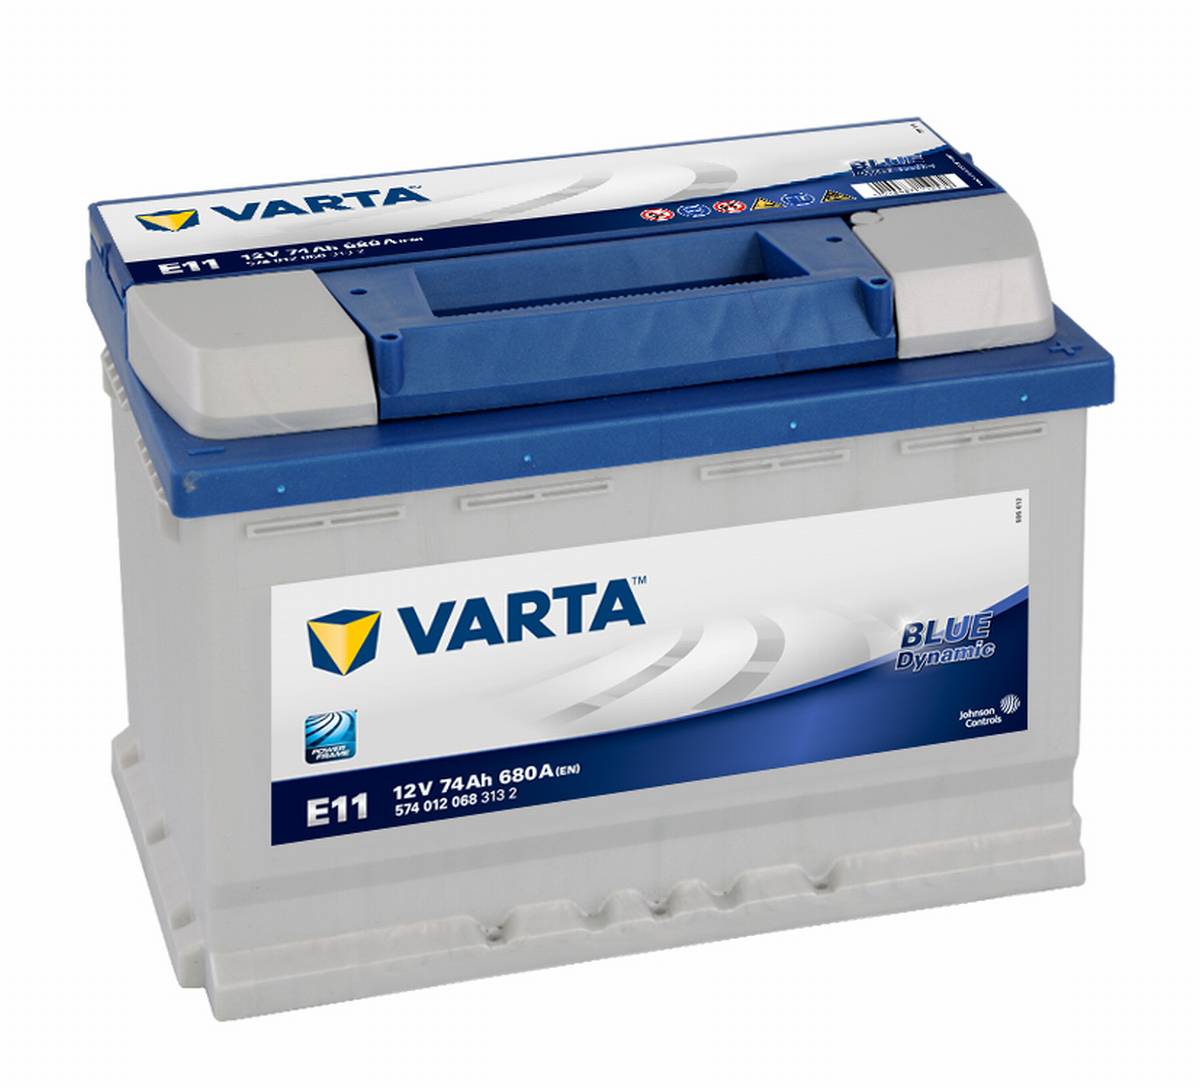 VARTA E11 Blue Dynamic 12V 74Ah 680A batteria auto 574 012 068